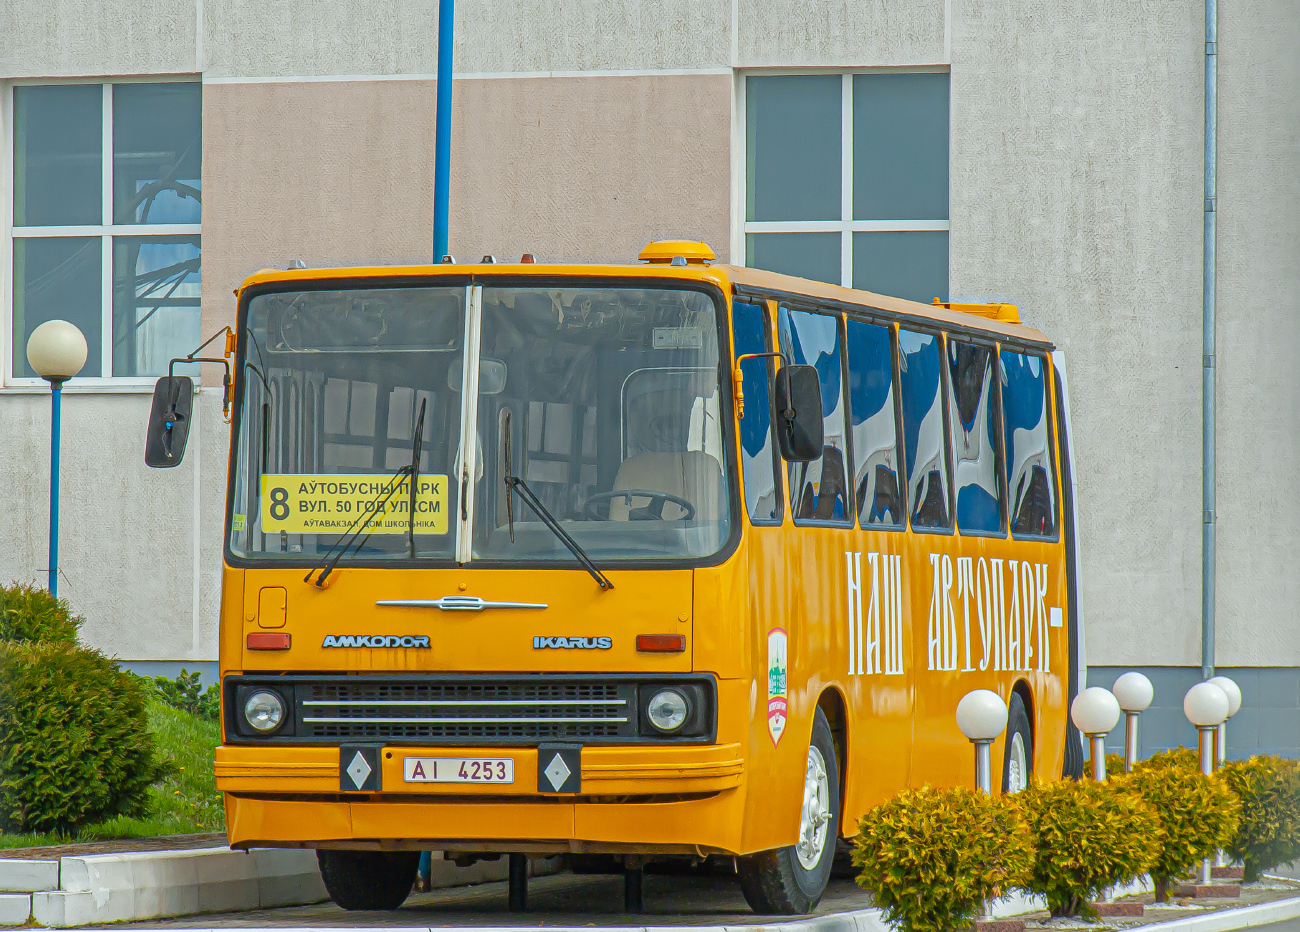 Baranovichi, Amkodor-10126 (Ikarus 280) č. 11490; Автобусы-памятники